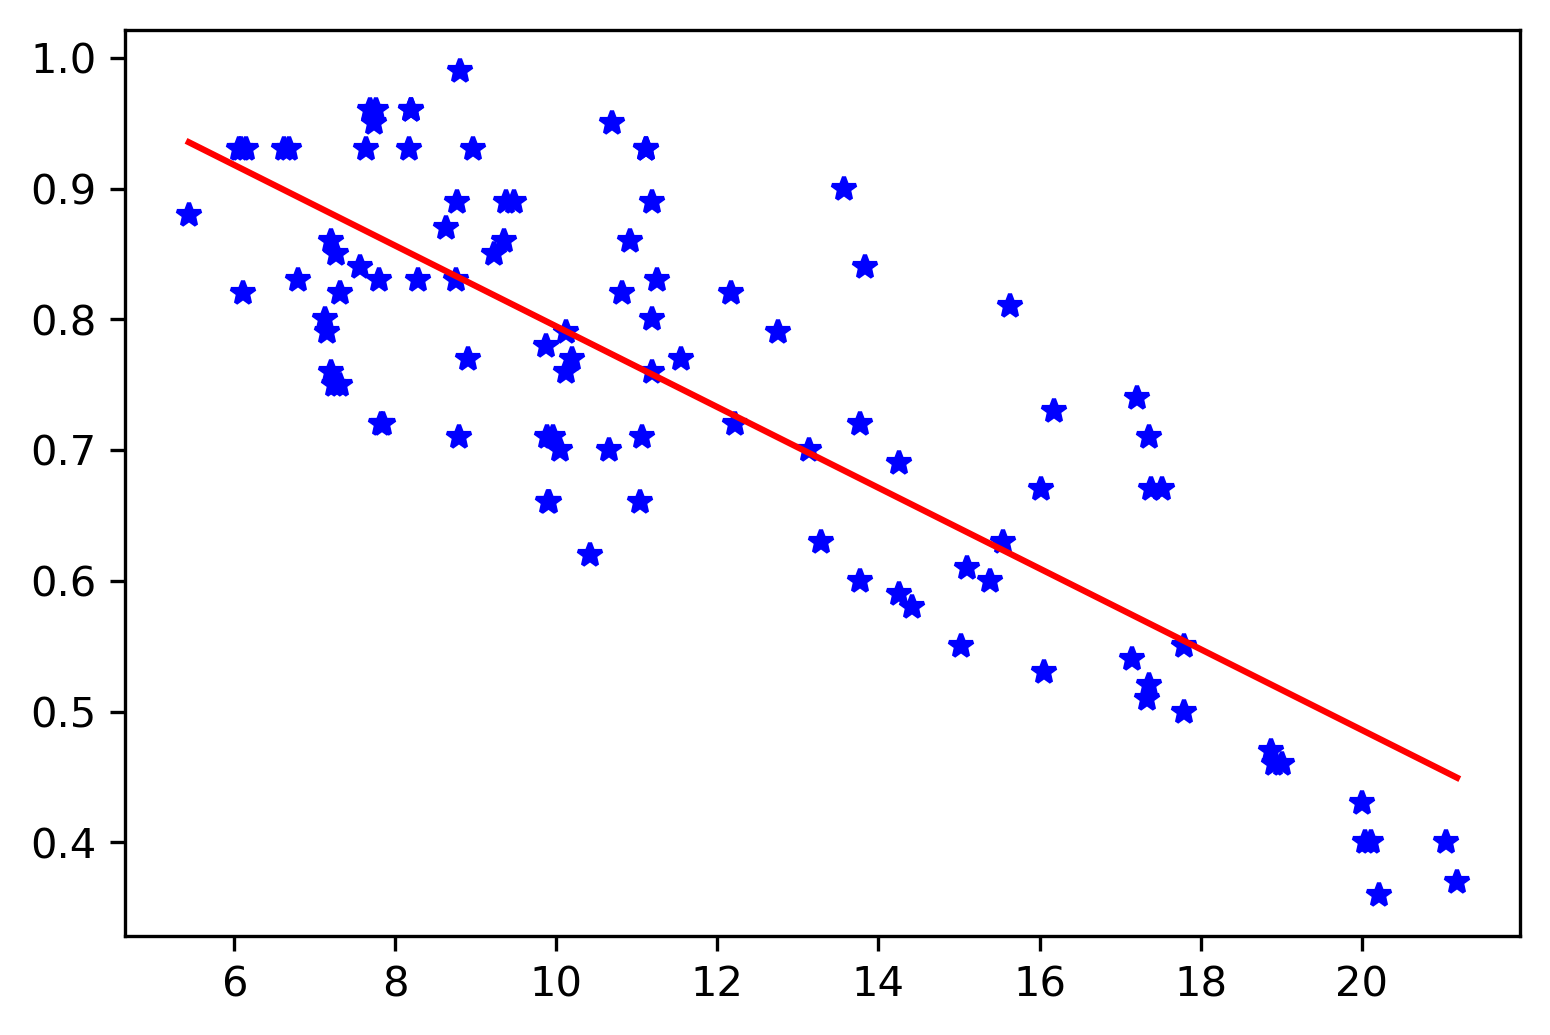 Maximum likelihood estimation for the regression parameters
